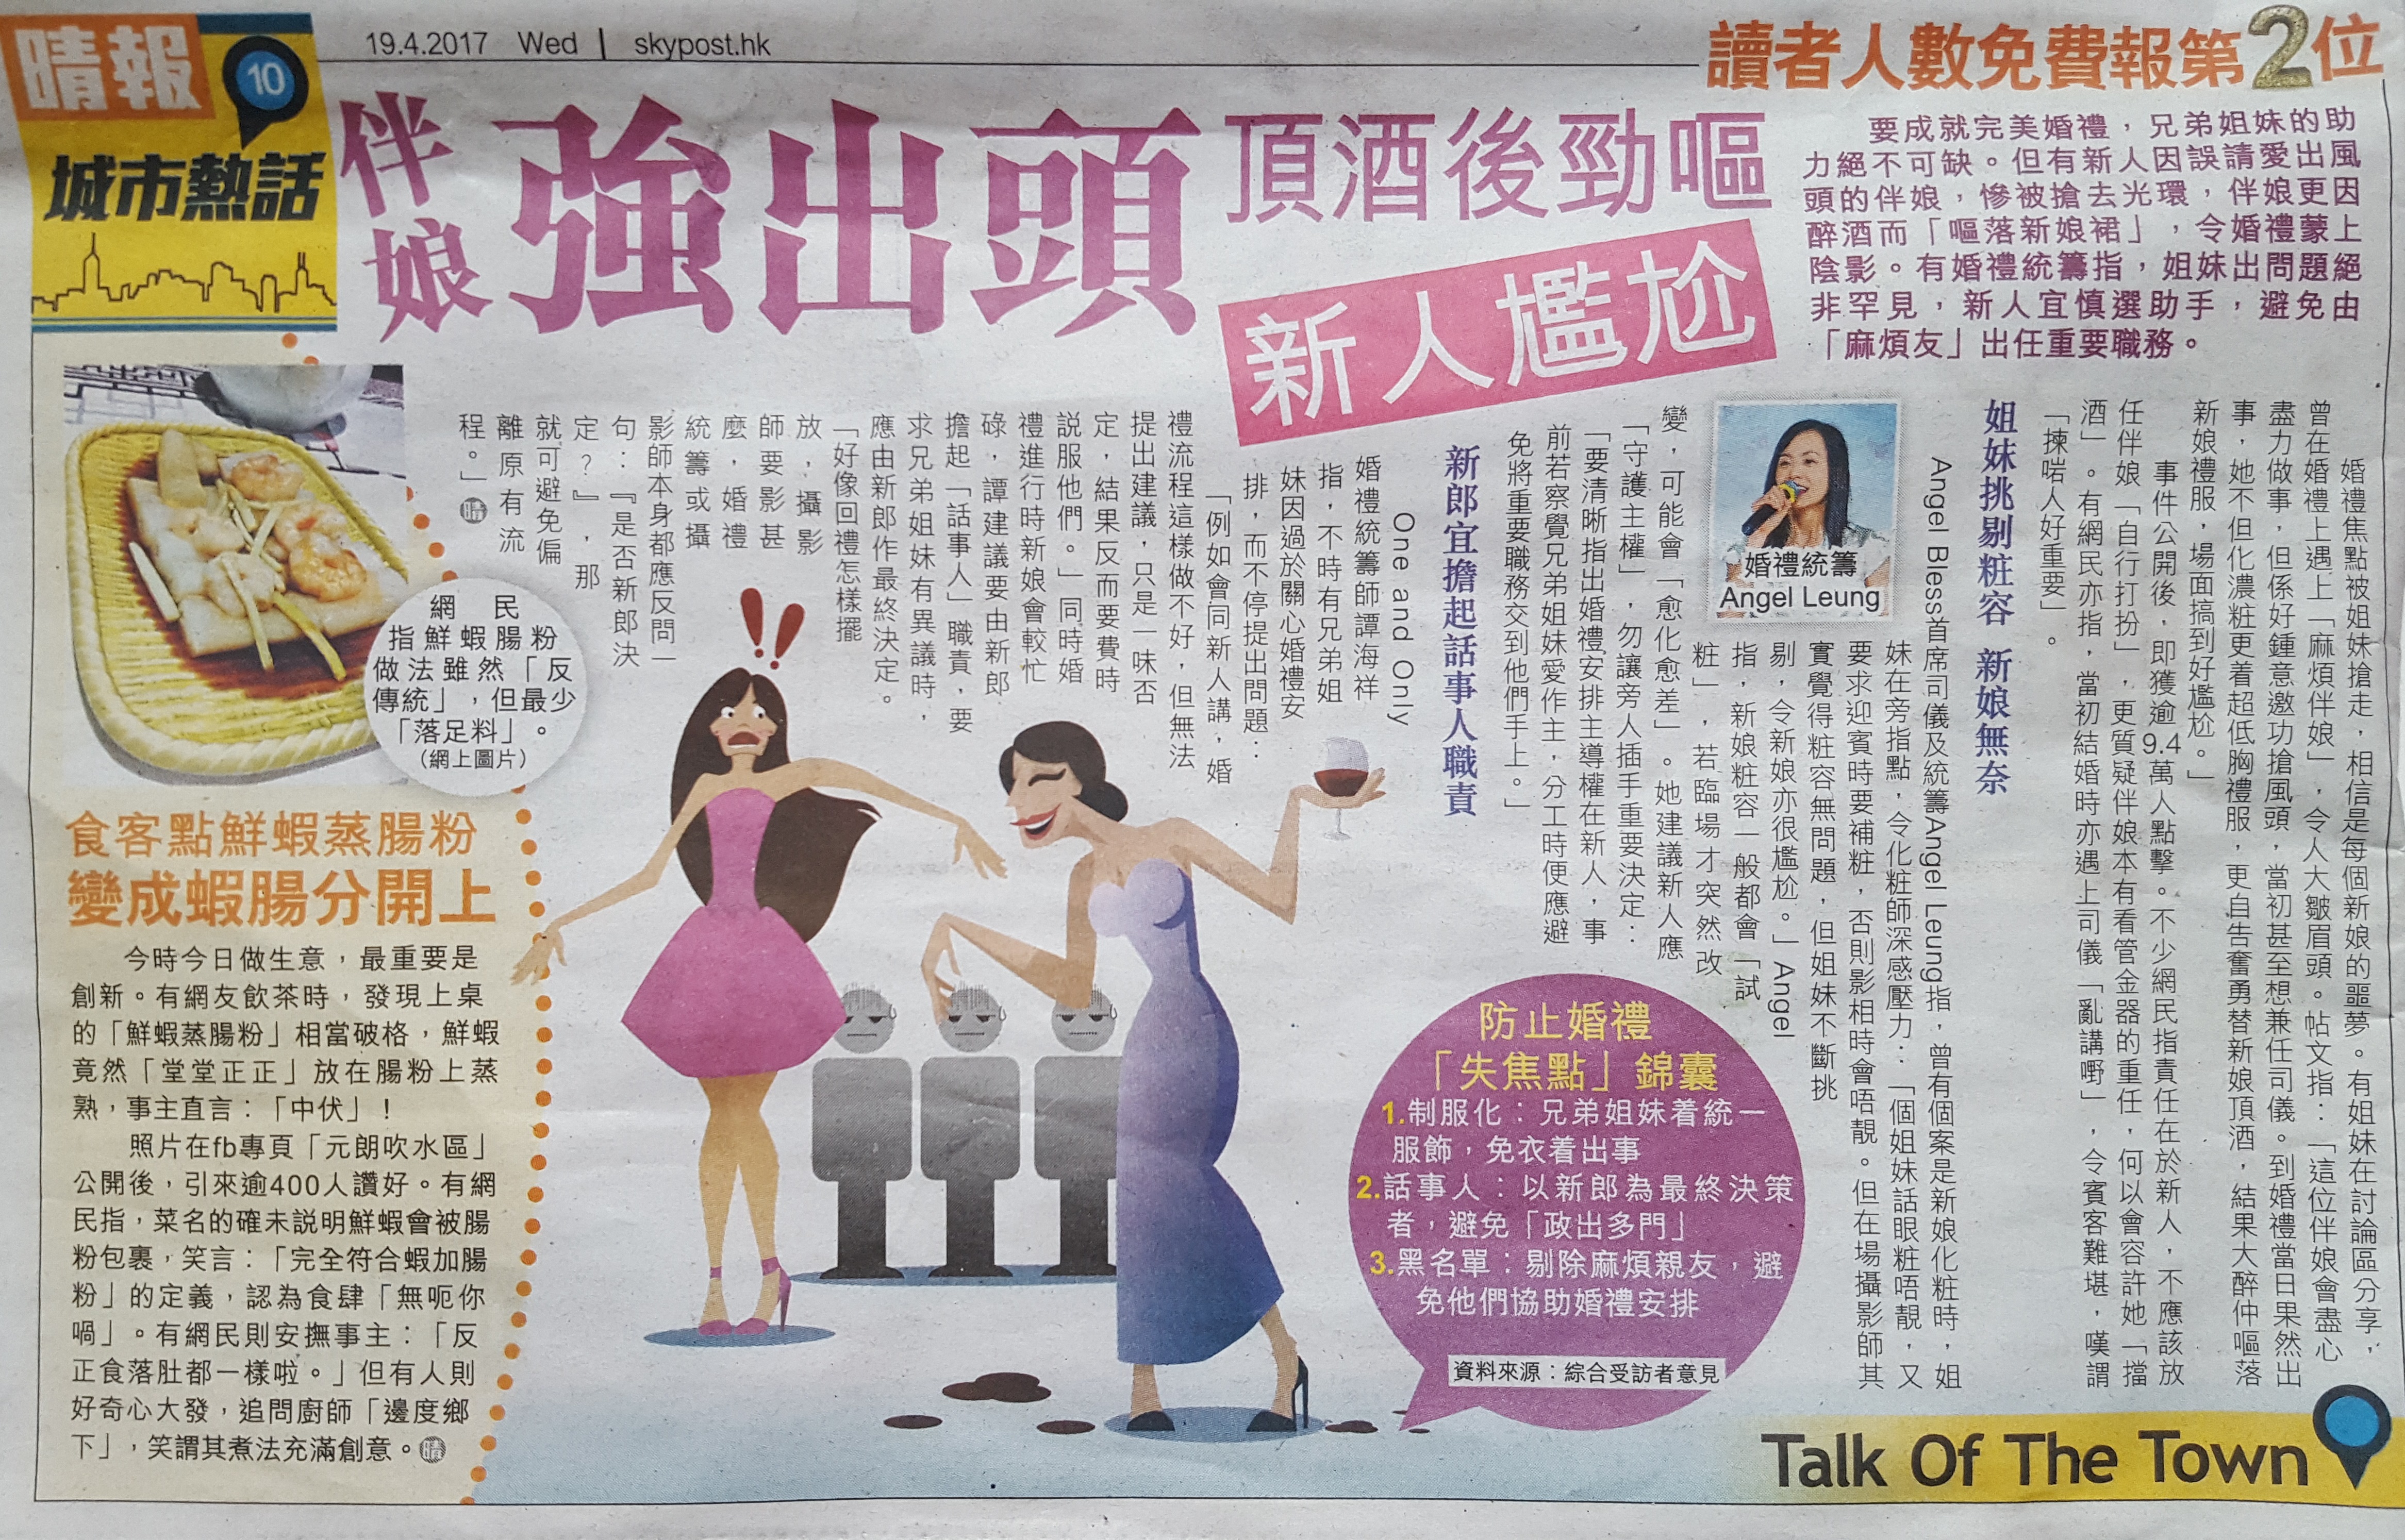 MC Angel Leung 司儀傳媒報導: 伴娘強出頭 頂酒後勁嘔 新人尷尬